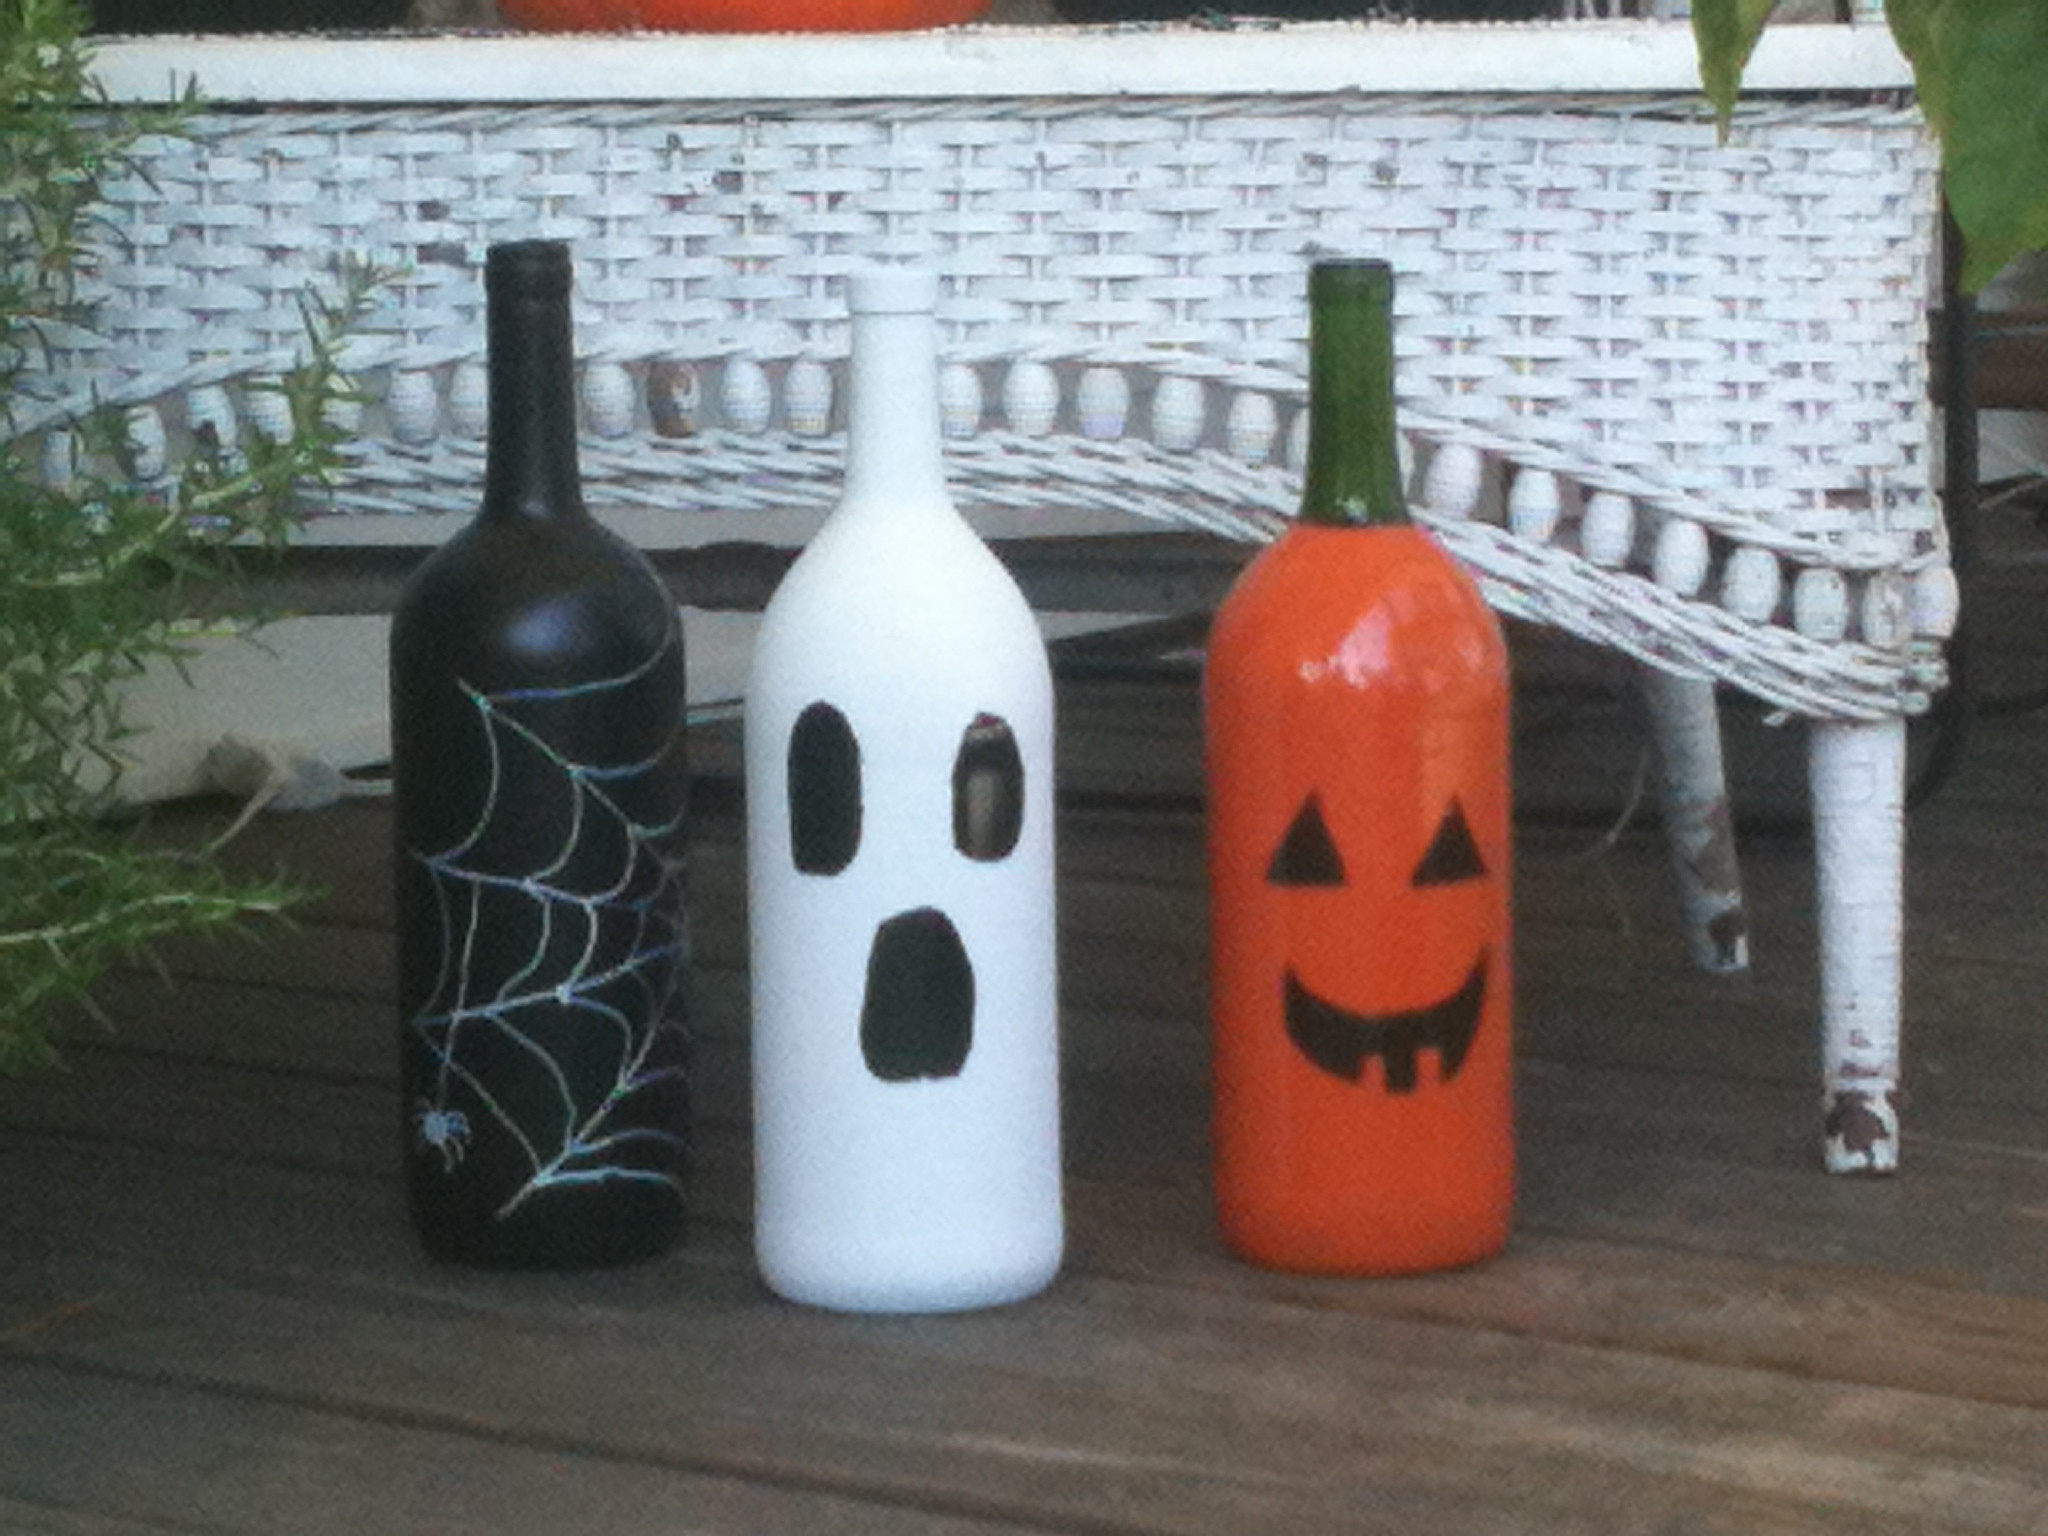 Best ideas about Halloween Decorations DIY
. Save or Pin DIY Halloween Decorations Now.